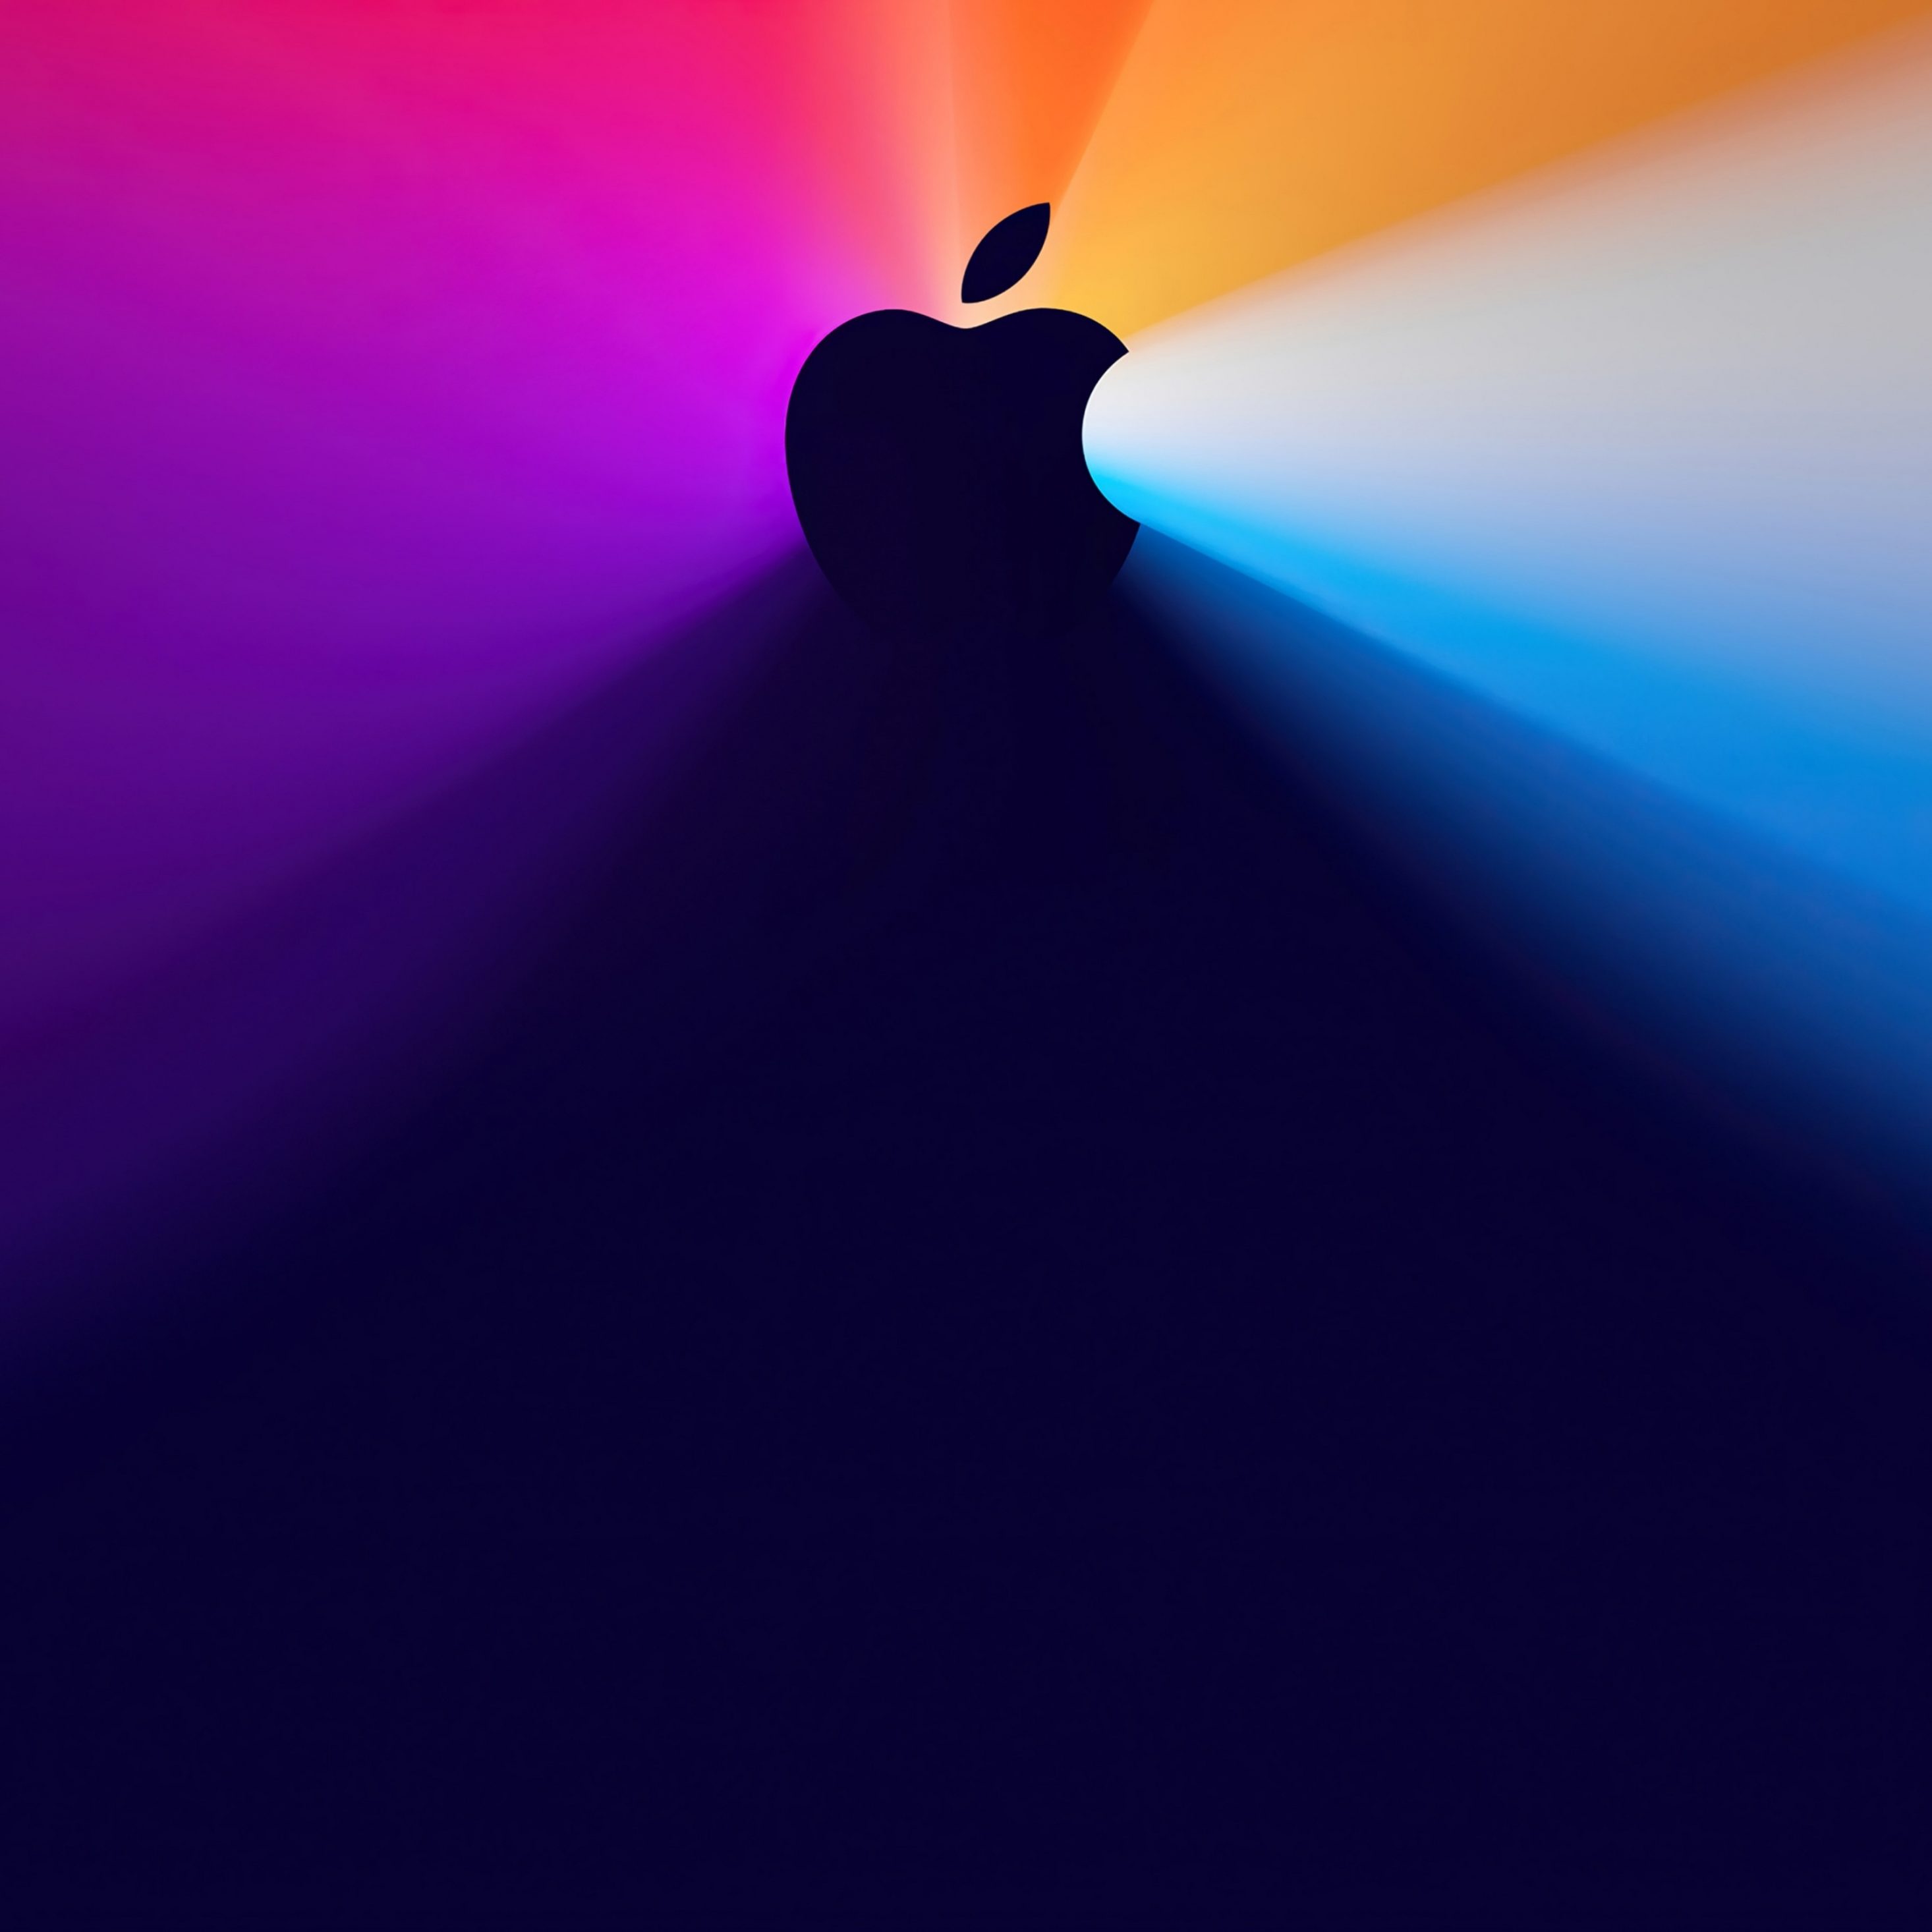 2932x2932 iPad Pro wallpaper 4k Colourful iPhone 12 Apple Logo iPad Wallpaper 2932x2932 pixels resolution